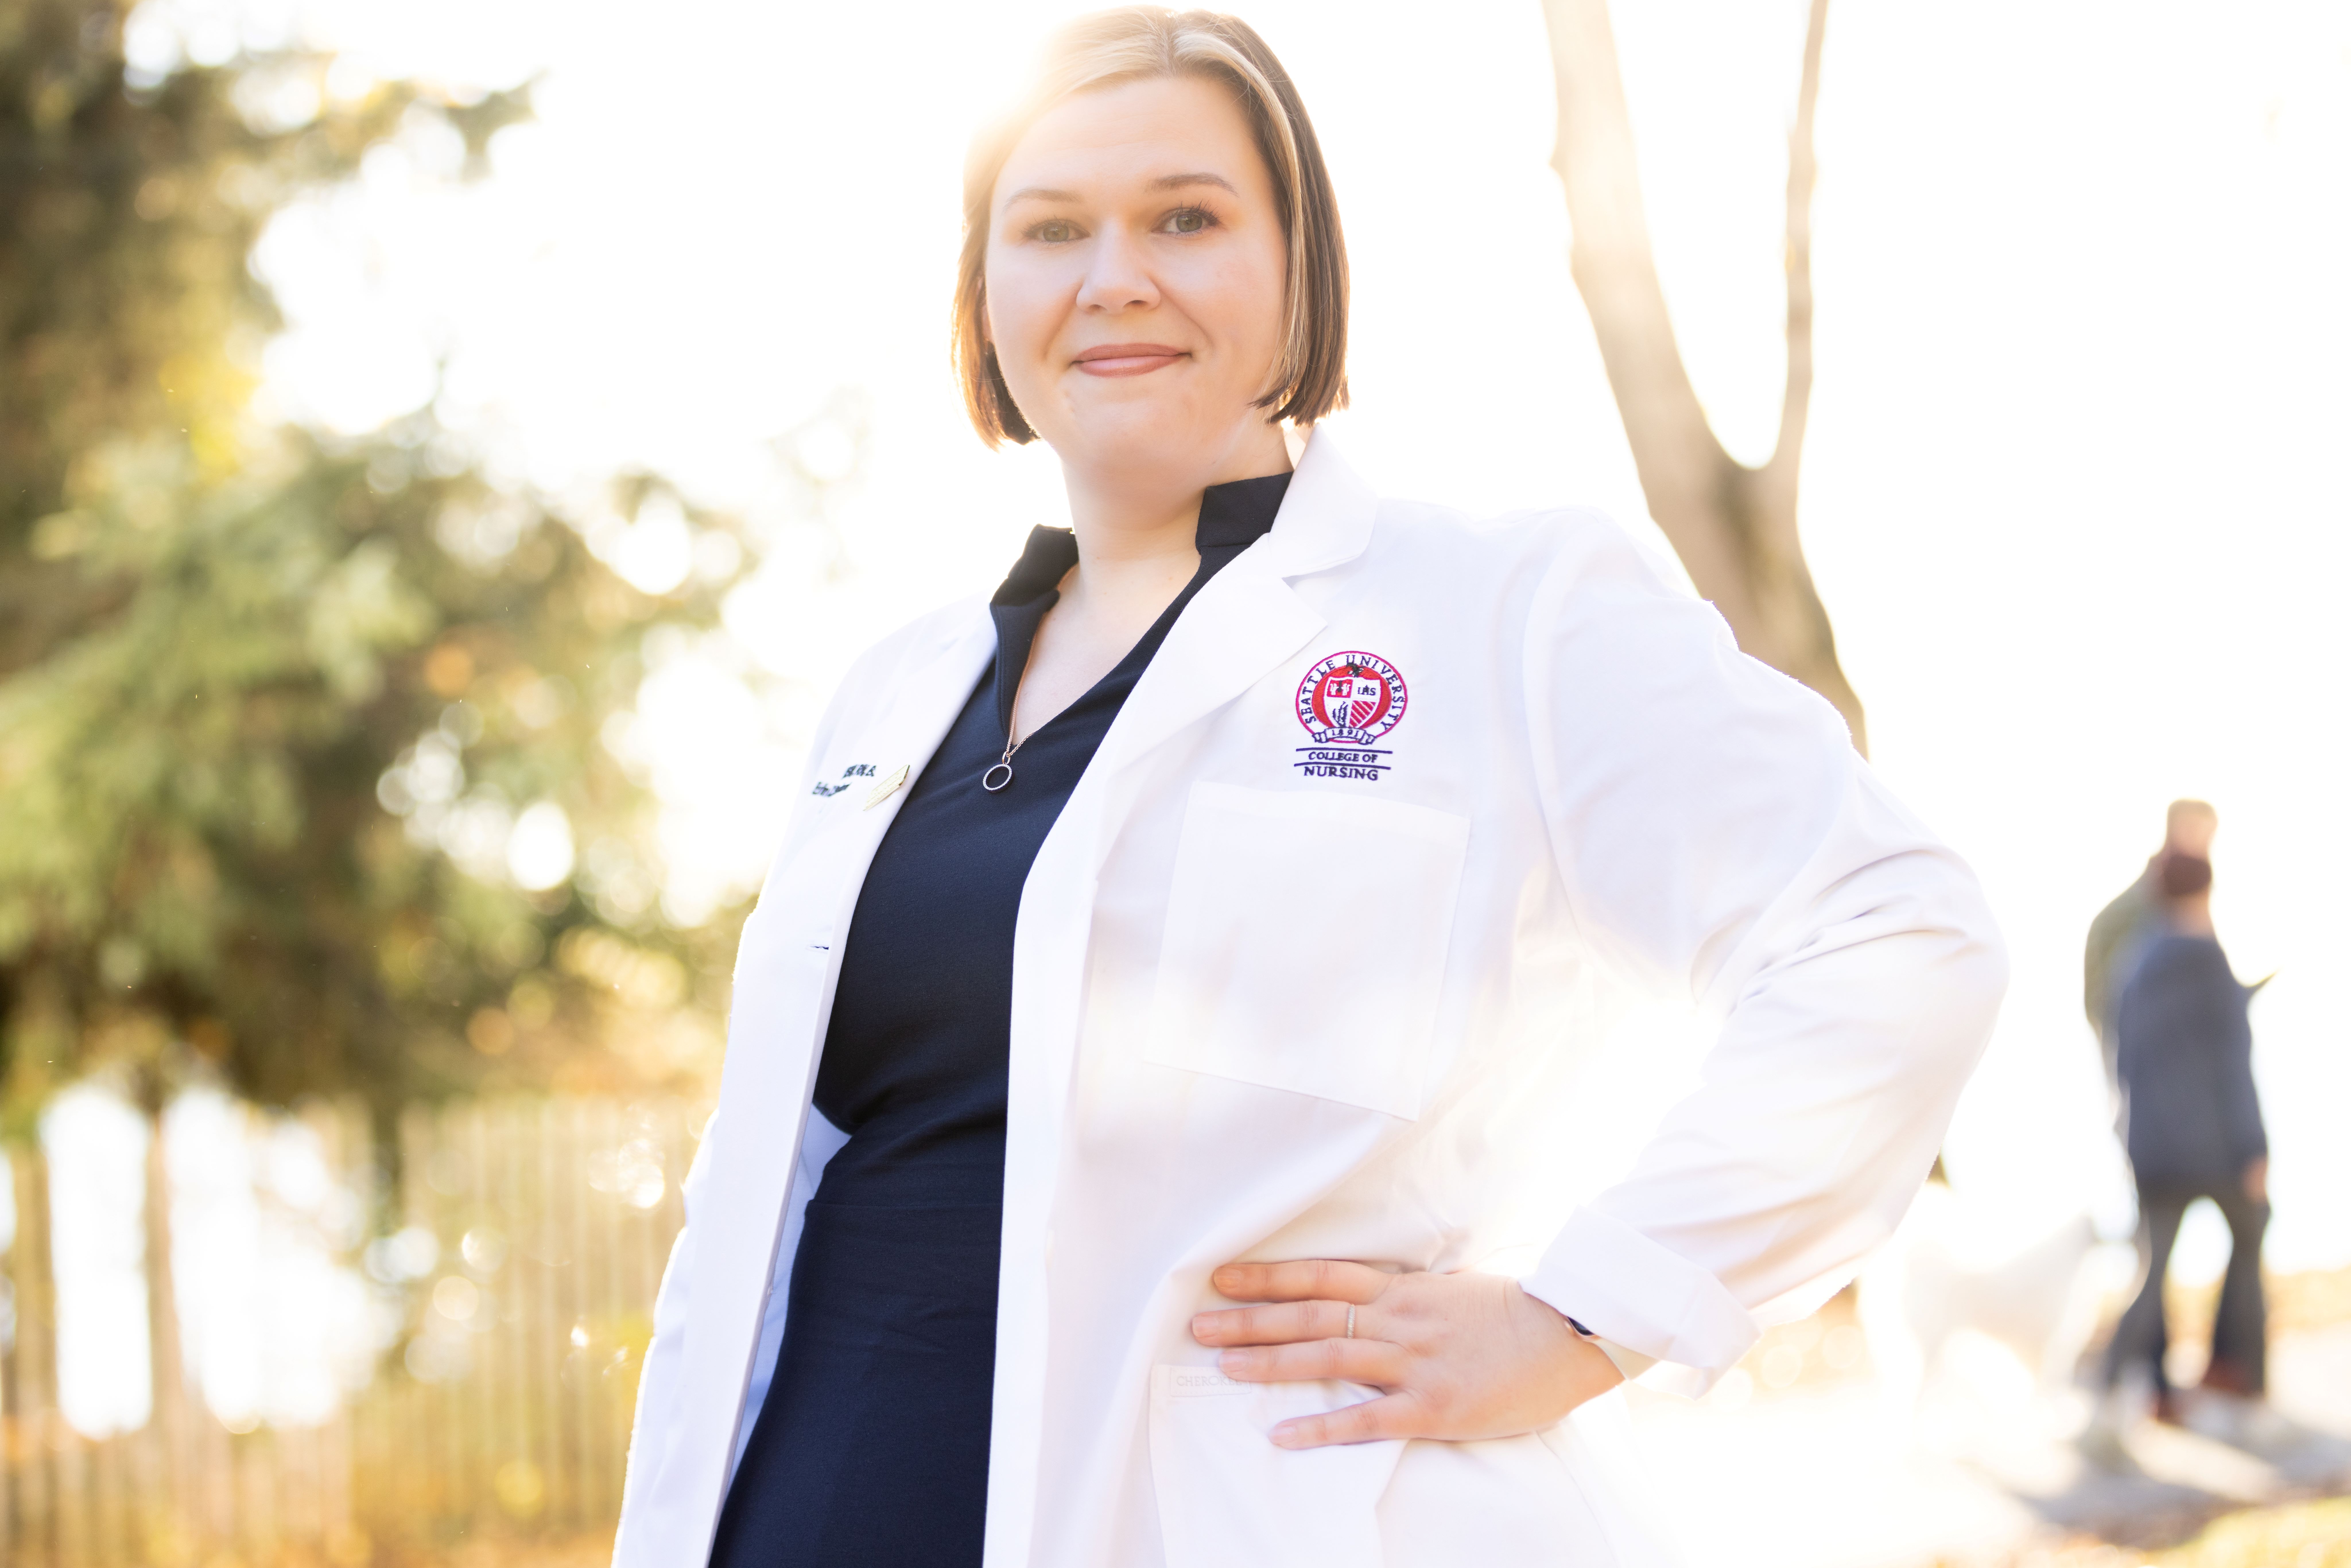 Advanced health care graduate scholar posing confidently in white coat